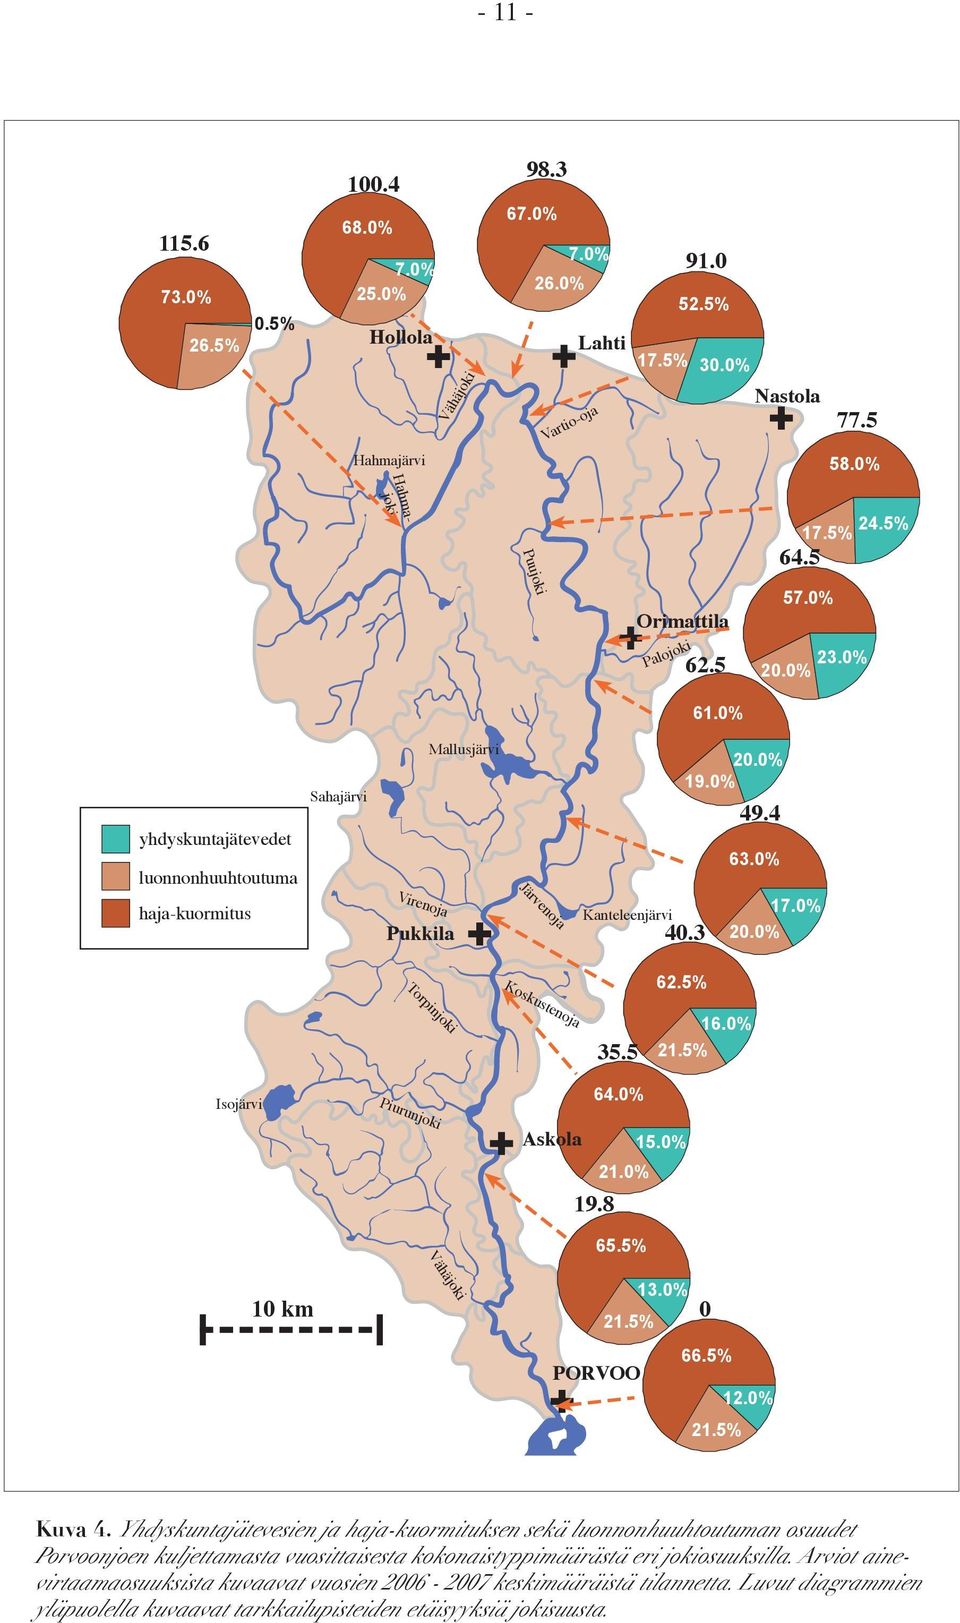 % 2.% Torpinjoki Koskustenoja 62.5% 35.5 16.% 21.5% Isojärvi Piurunjoki 64.% Askola 15.% 21.% 19.8 65.5% 1 km Vähäjoki 21.5% PORVOO 13.% 66.5% 12.% 21.5% Kuva 4.